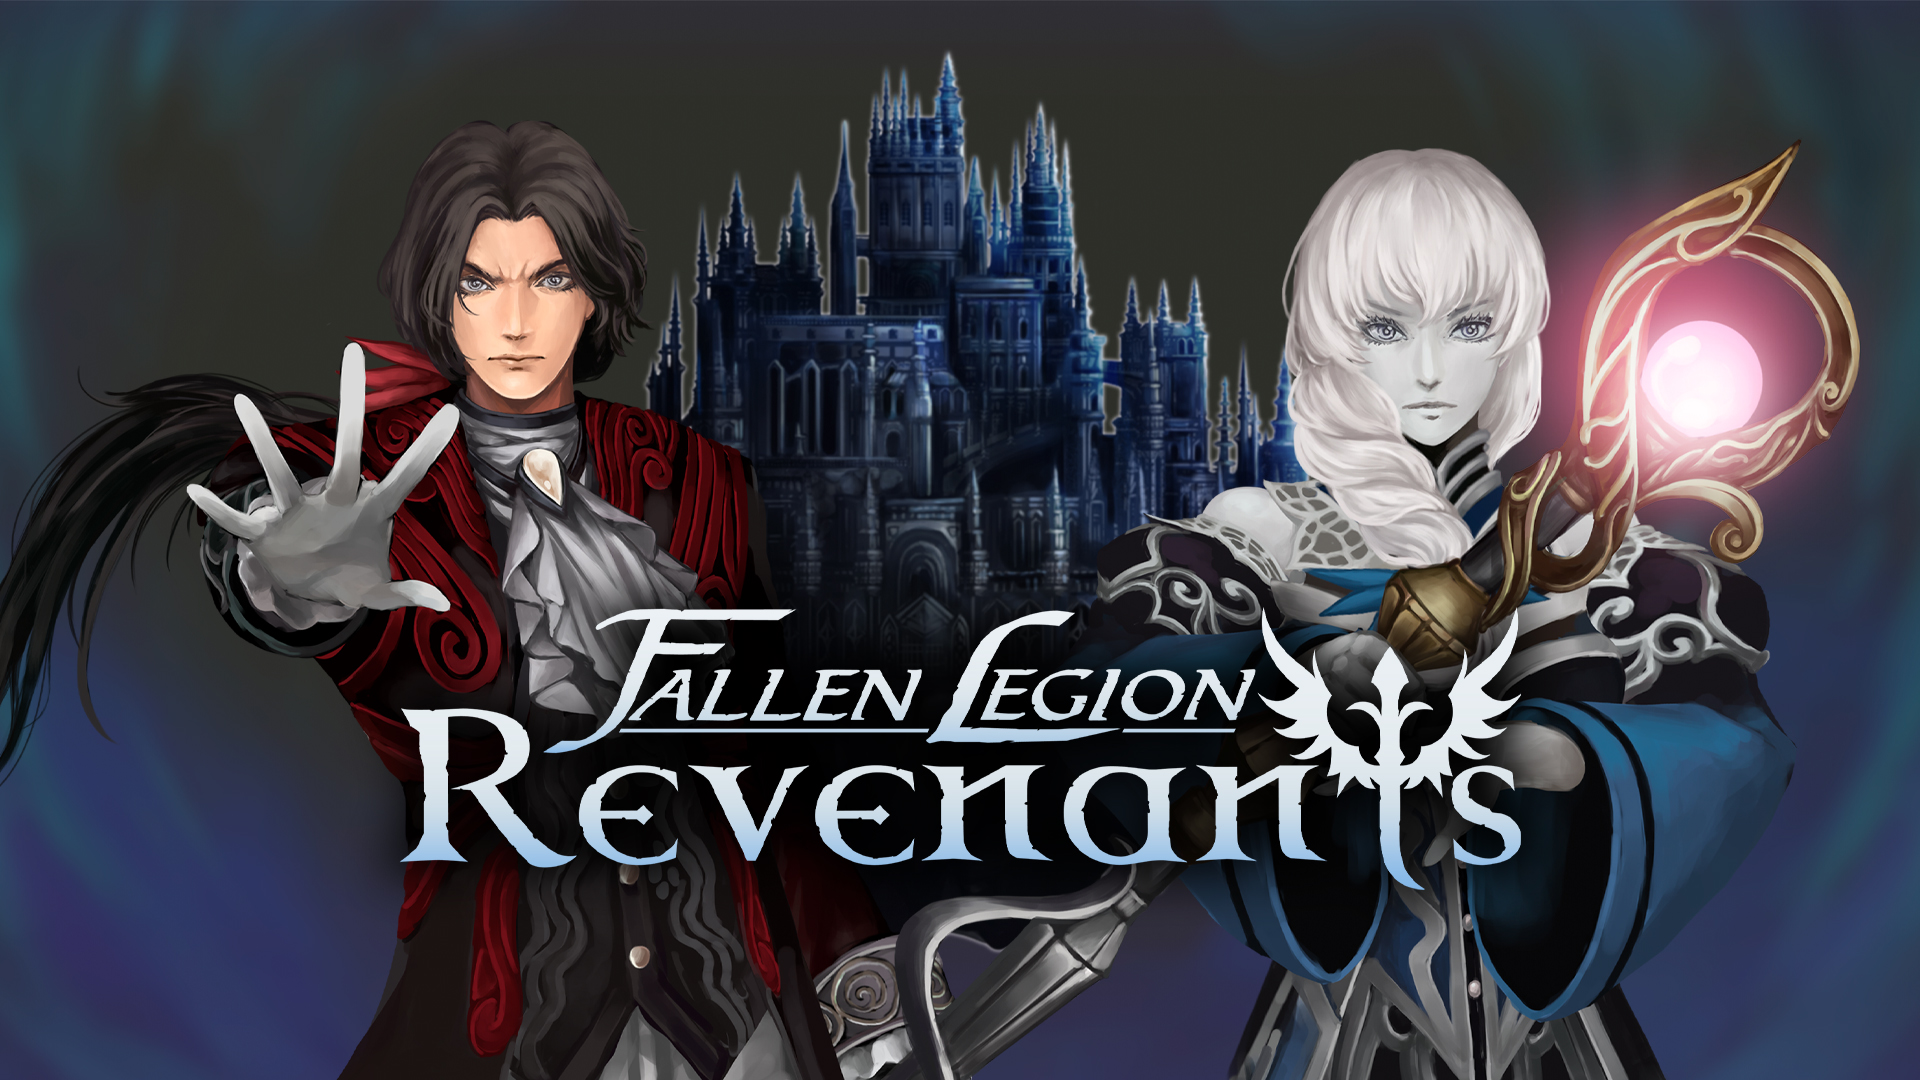 Fallen Legion Revenants Review